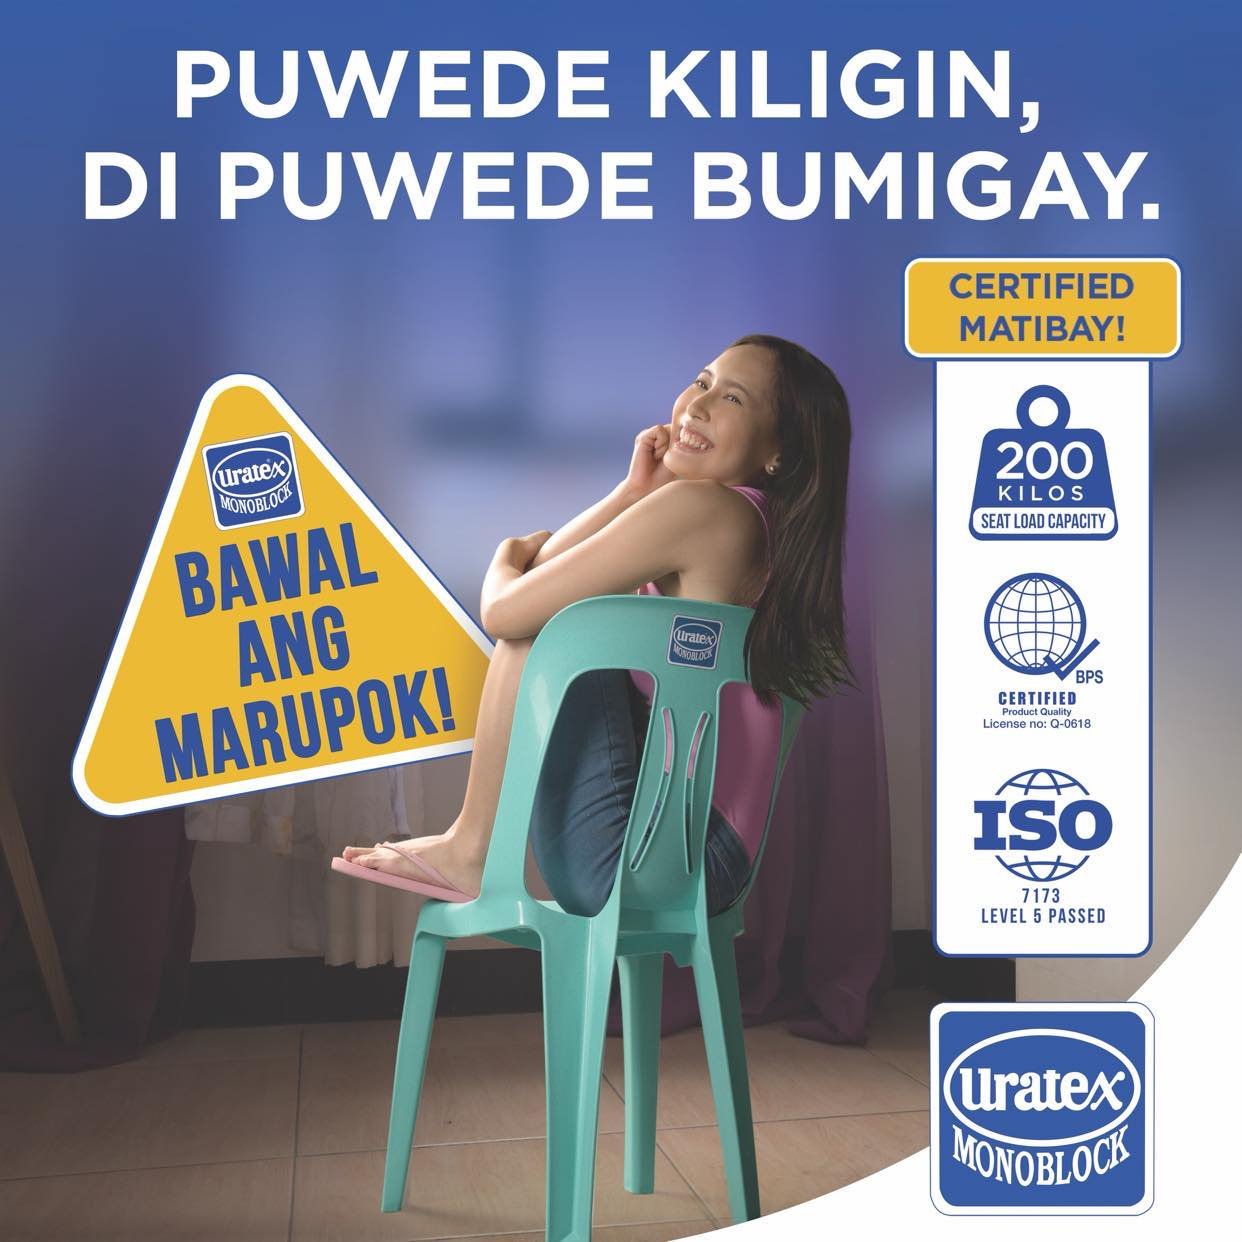 Uratex Monoblocks Bawal ang Marupok Campaign Returns with a Hilarious Bang in Sulyap Ad